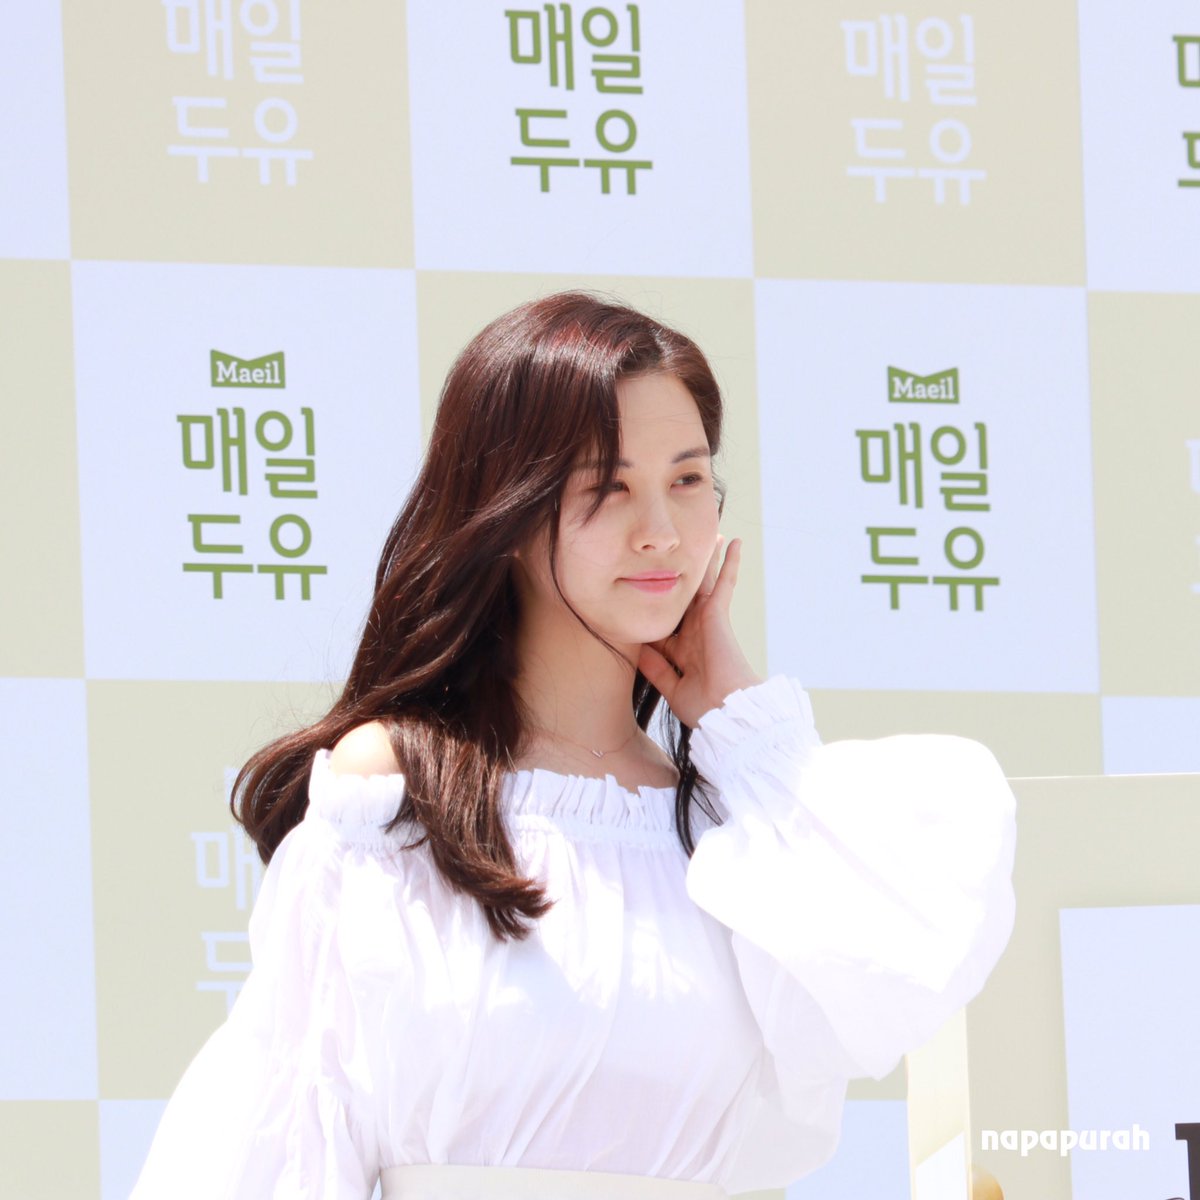  [PIC][03-06-2017]SeoHyun tham dự sự kiện “City Forestival - Maeil Duyou 'Confidence Diary'” vào chiều nay - Page 3 DBpDcx-UMAEREds